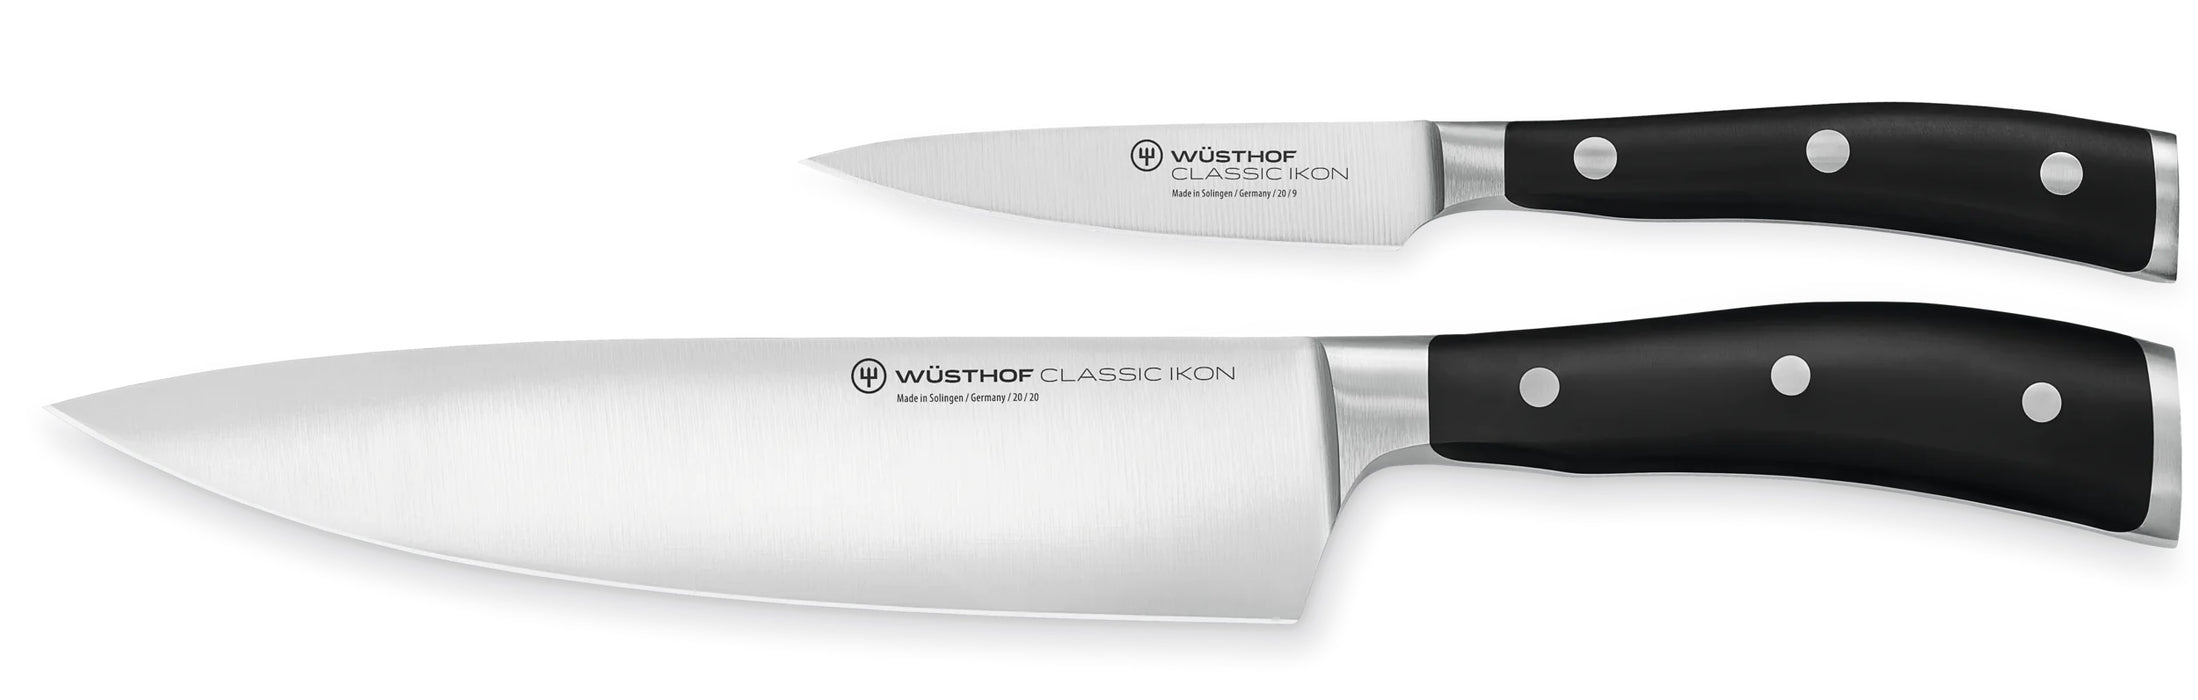 Wusthof Classic Ikon 2 Pc Starter Chef's Knife Set 1120360205